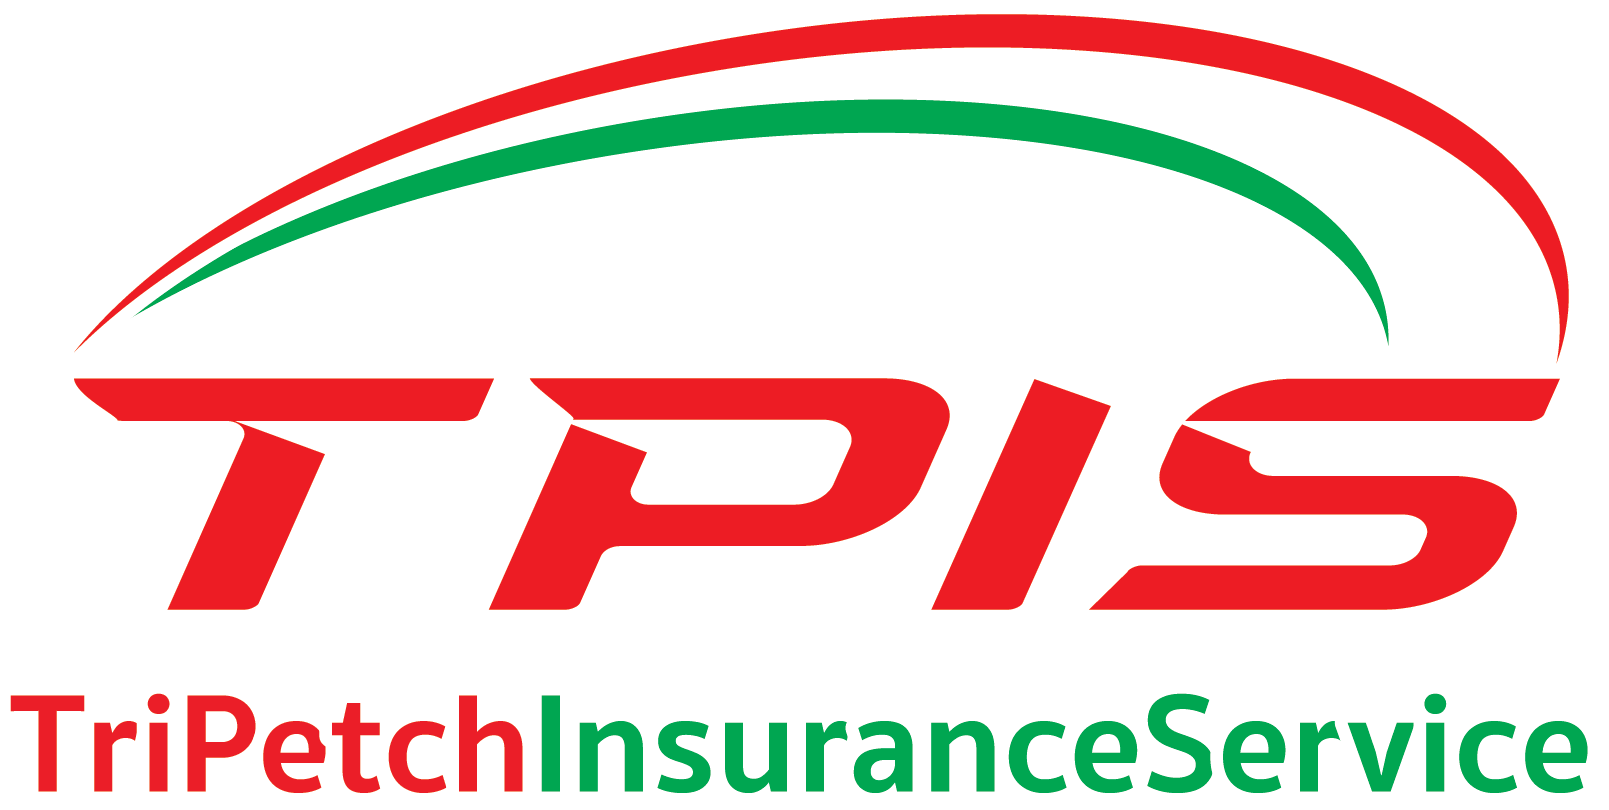 Tripetch Insurance logo